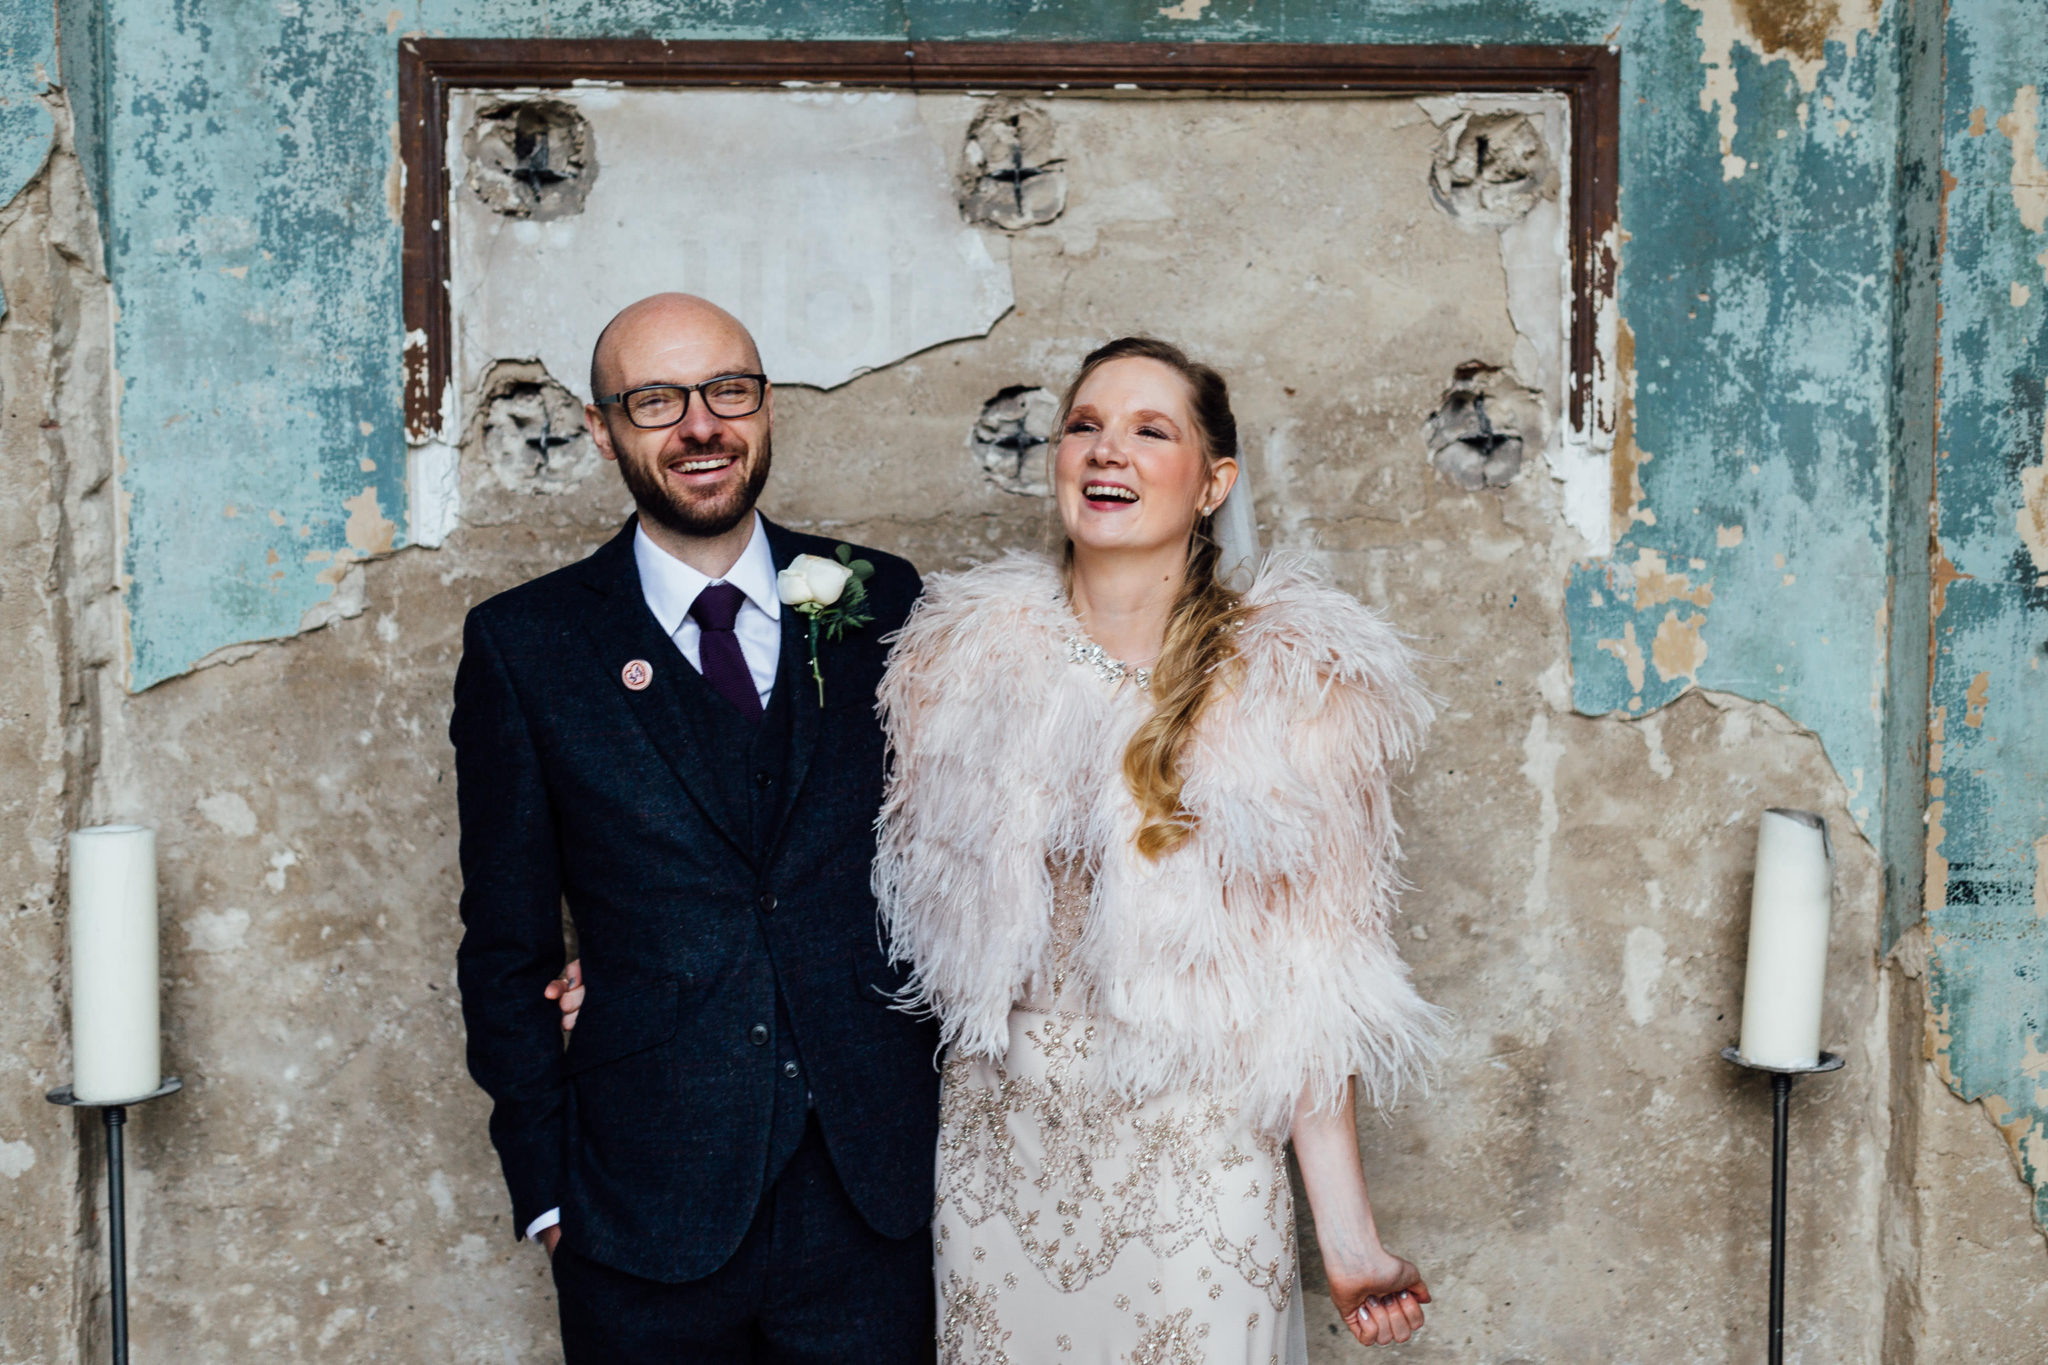 COUPLE PORTRAITS BRIDE GROOM AT THE ASYLUM LONDON WEDDING PHOTOGRAPHY JENNY PACKHAM